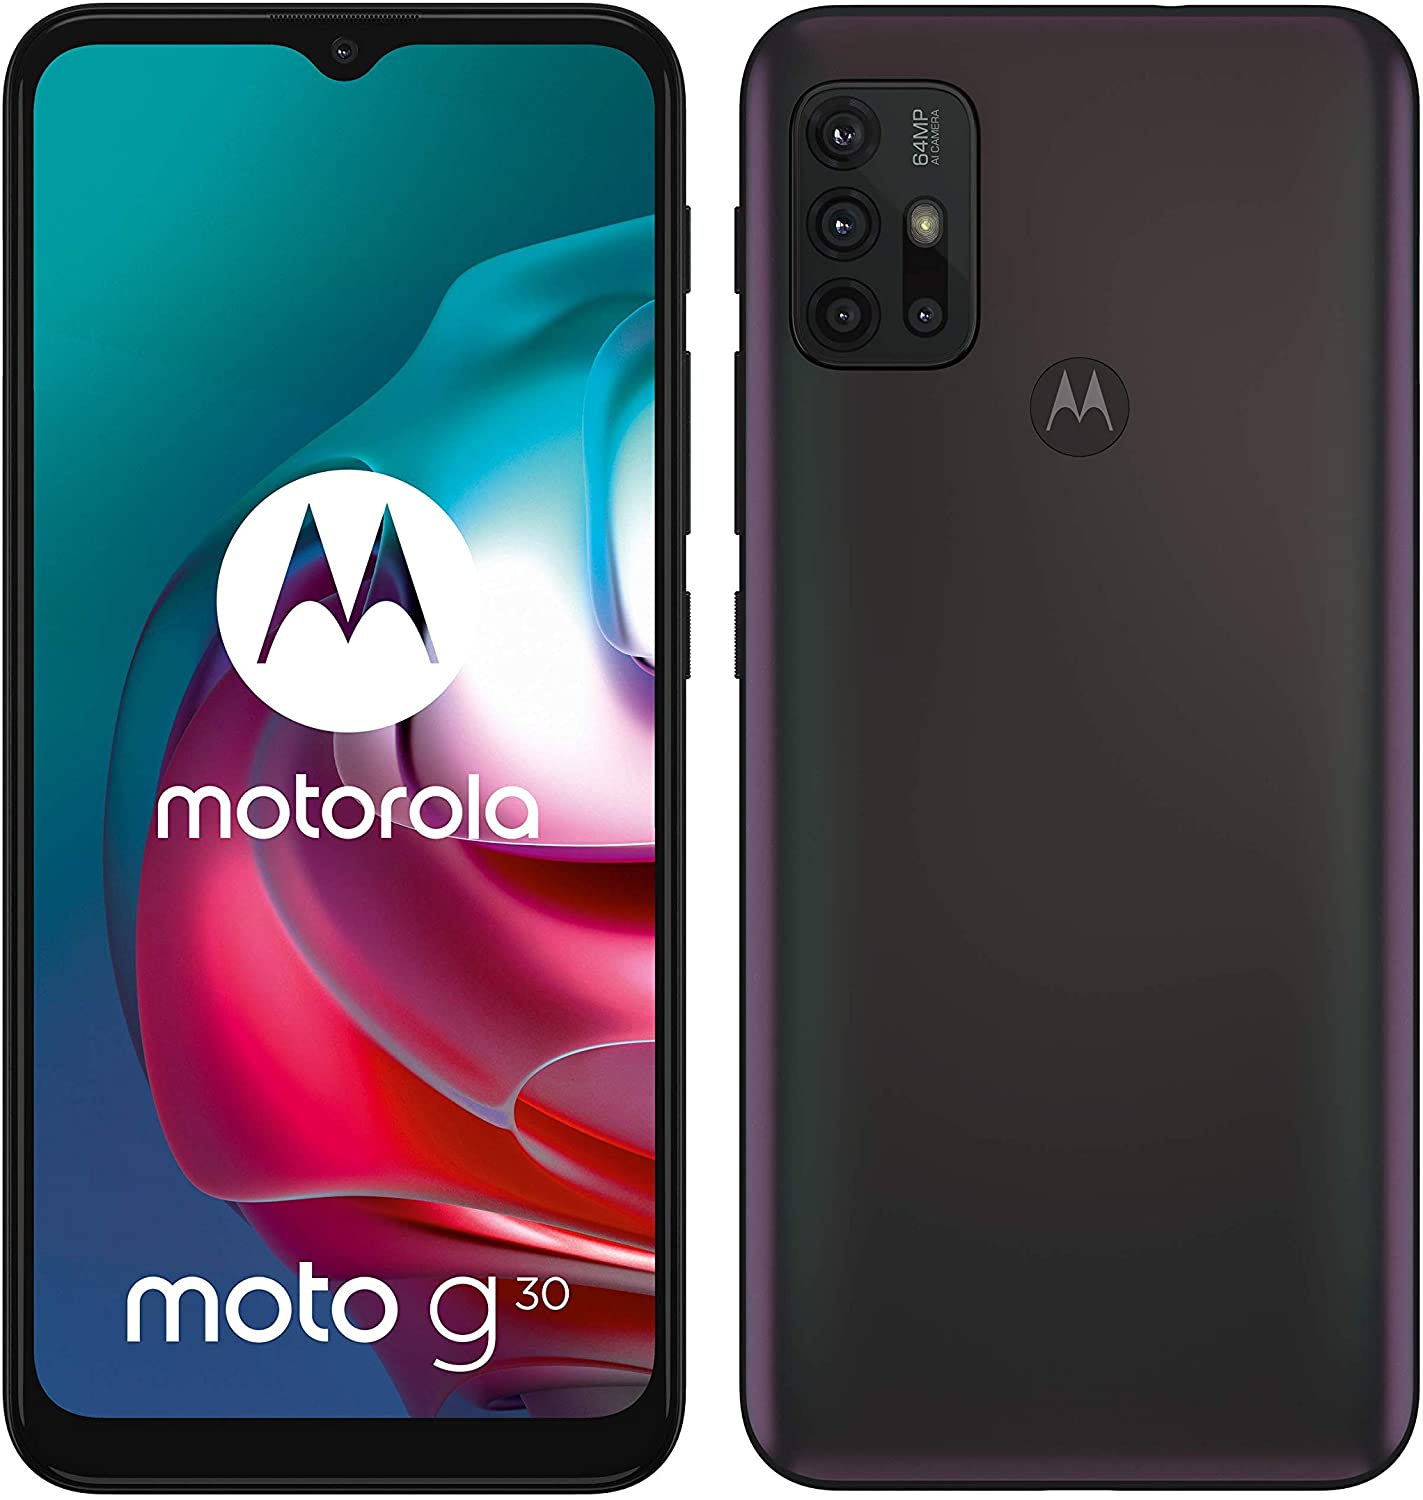 device does not turn on Motorola Moto G30